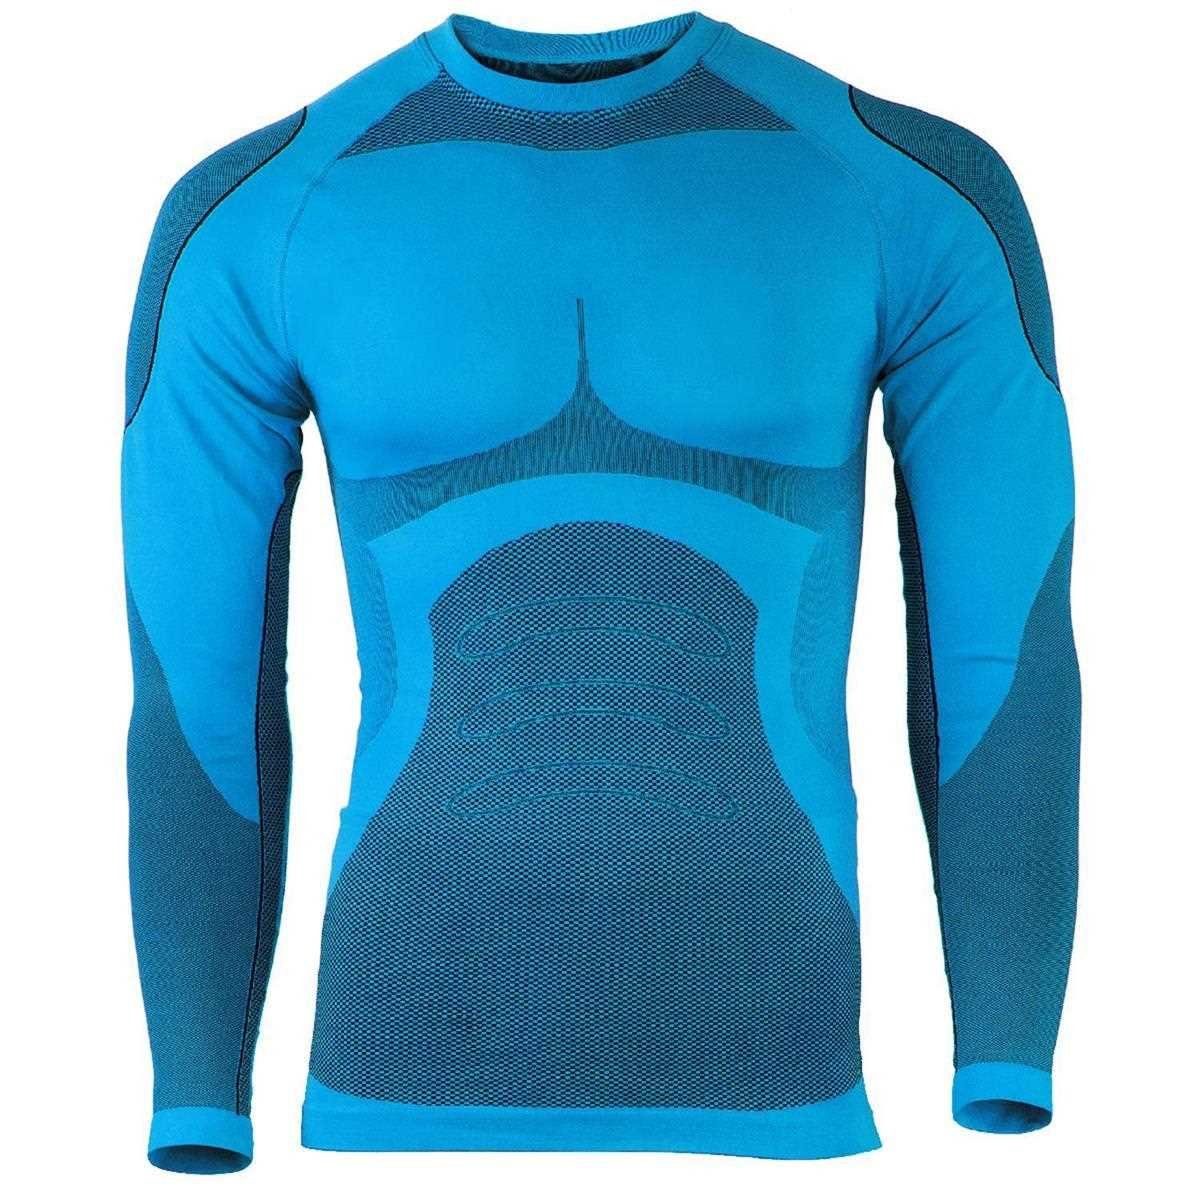 Snake Skiunterhemd Seamless Funktionsunterhemd Thermounterhemd Black Blau python (1-St) Sportunterhemd